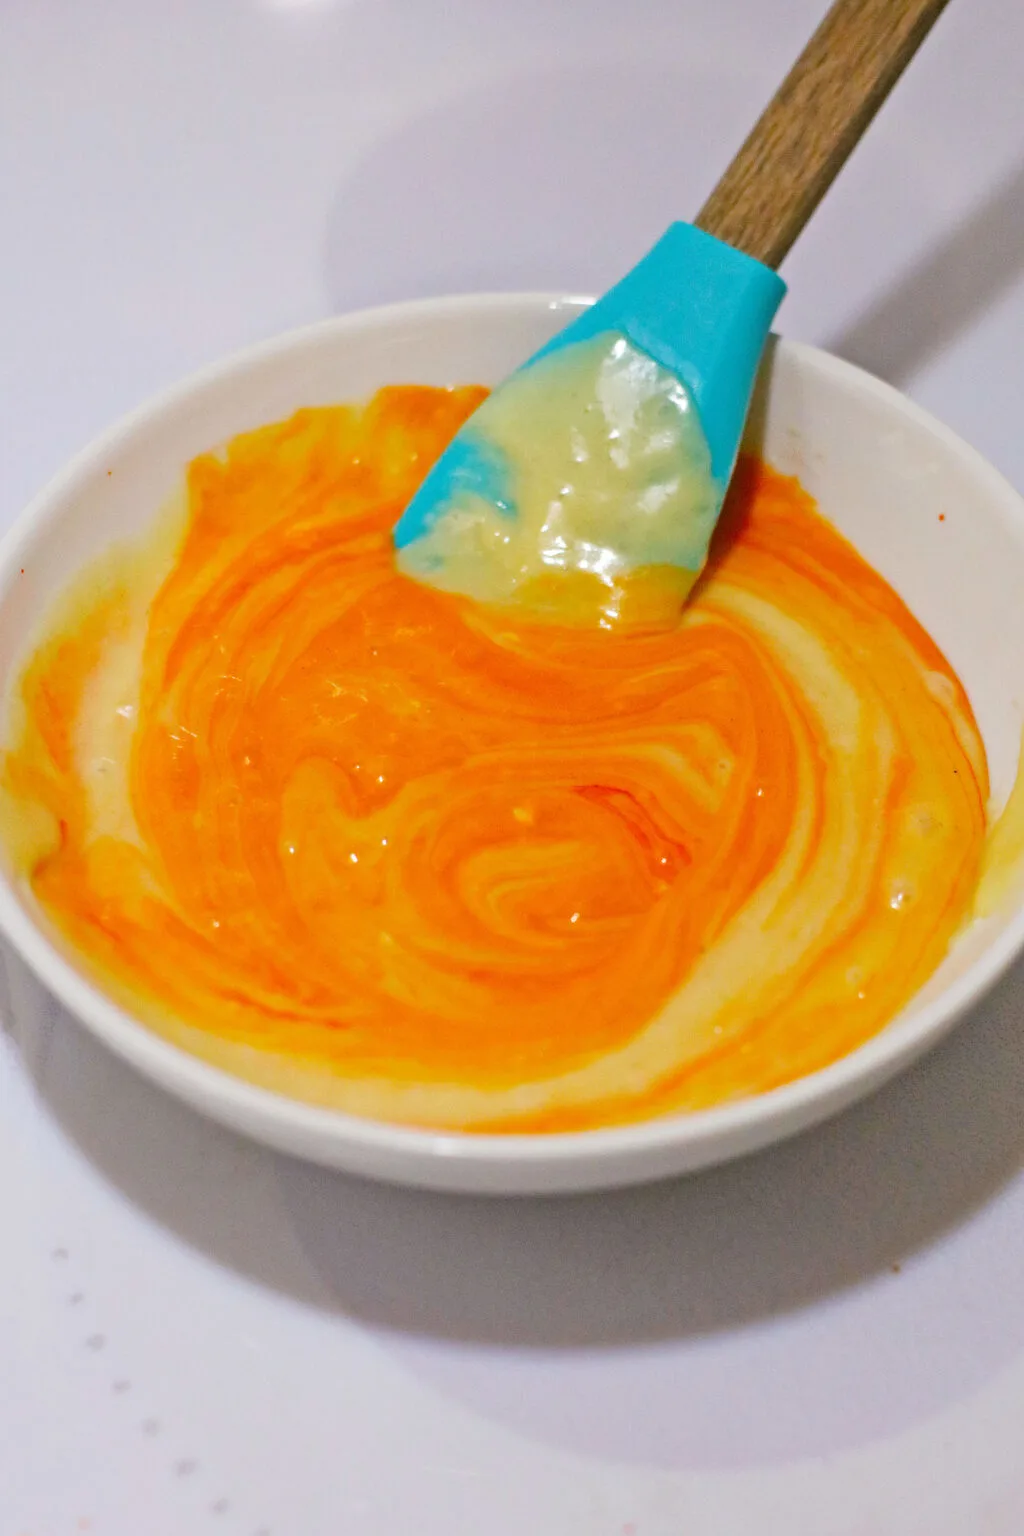 orange food coloring added to cupcake batter